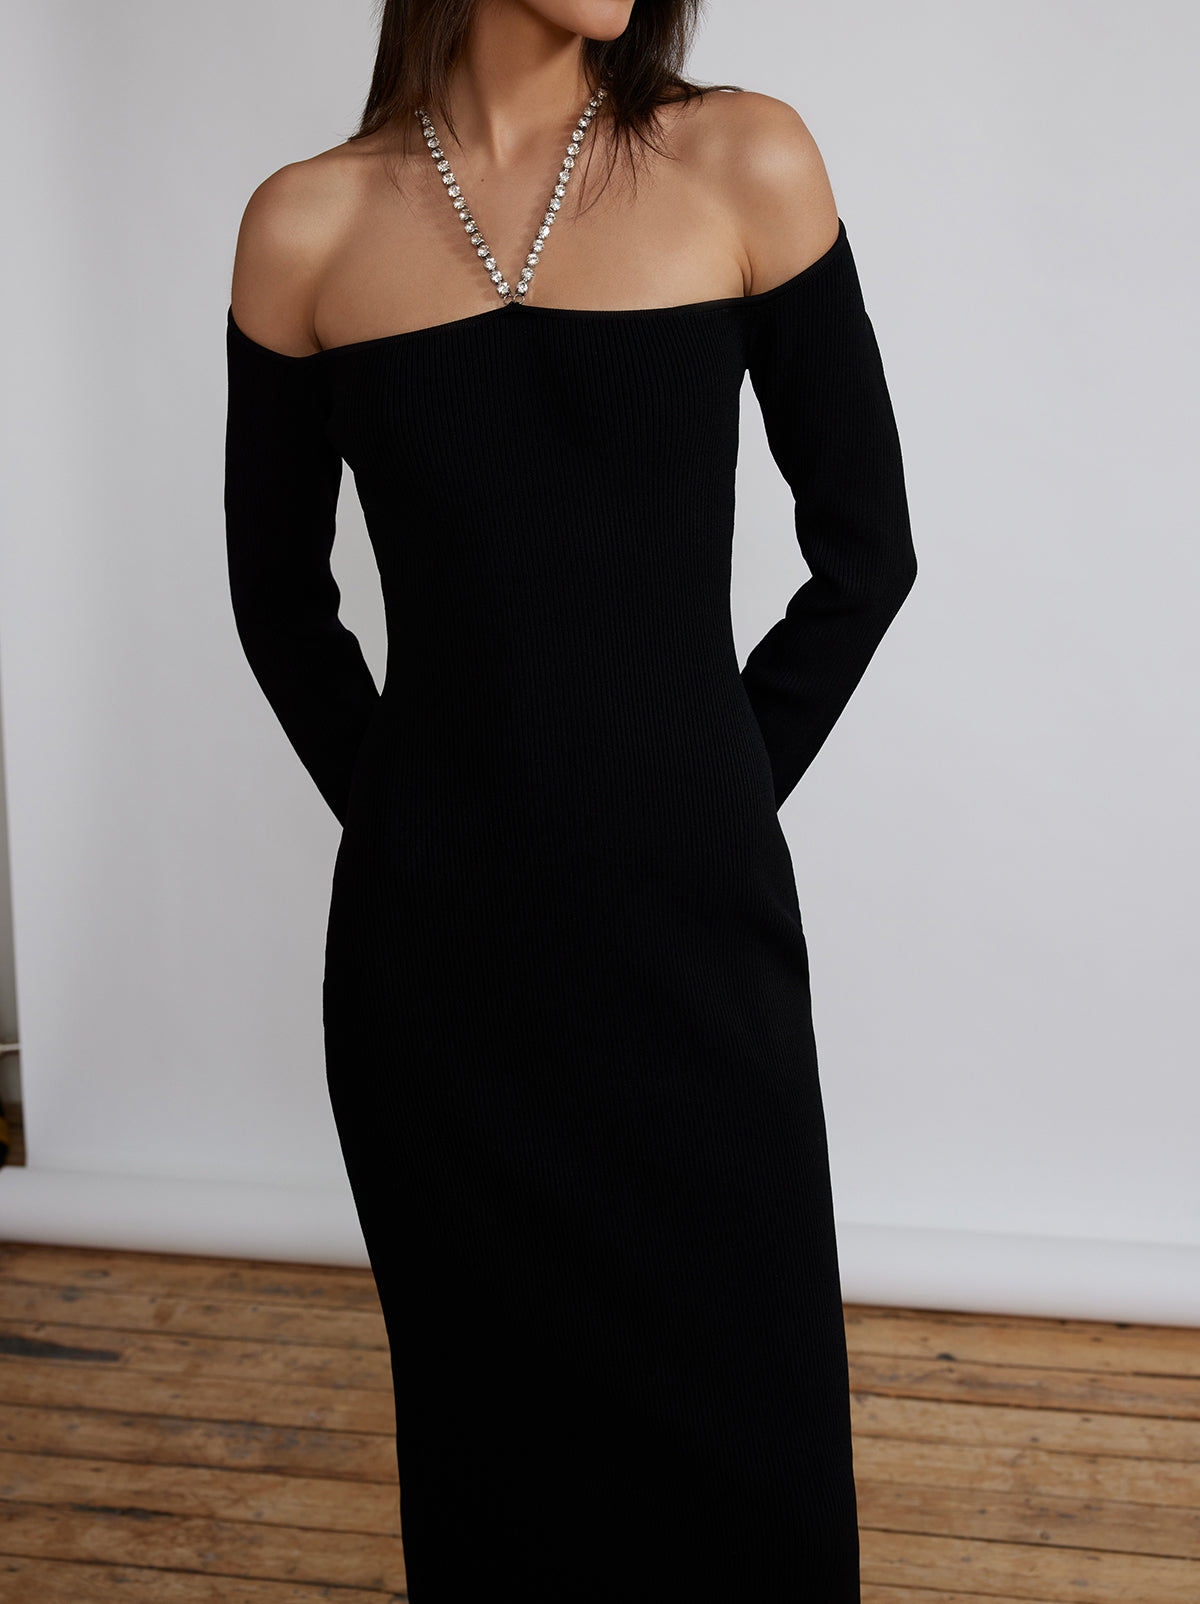 Renee Black Bardot Knit Dress